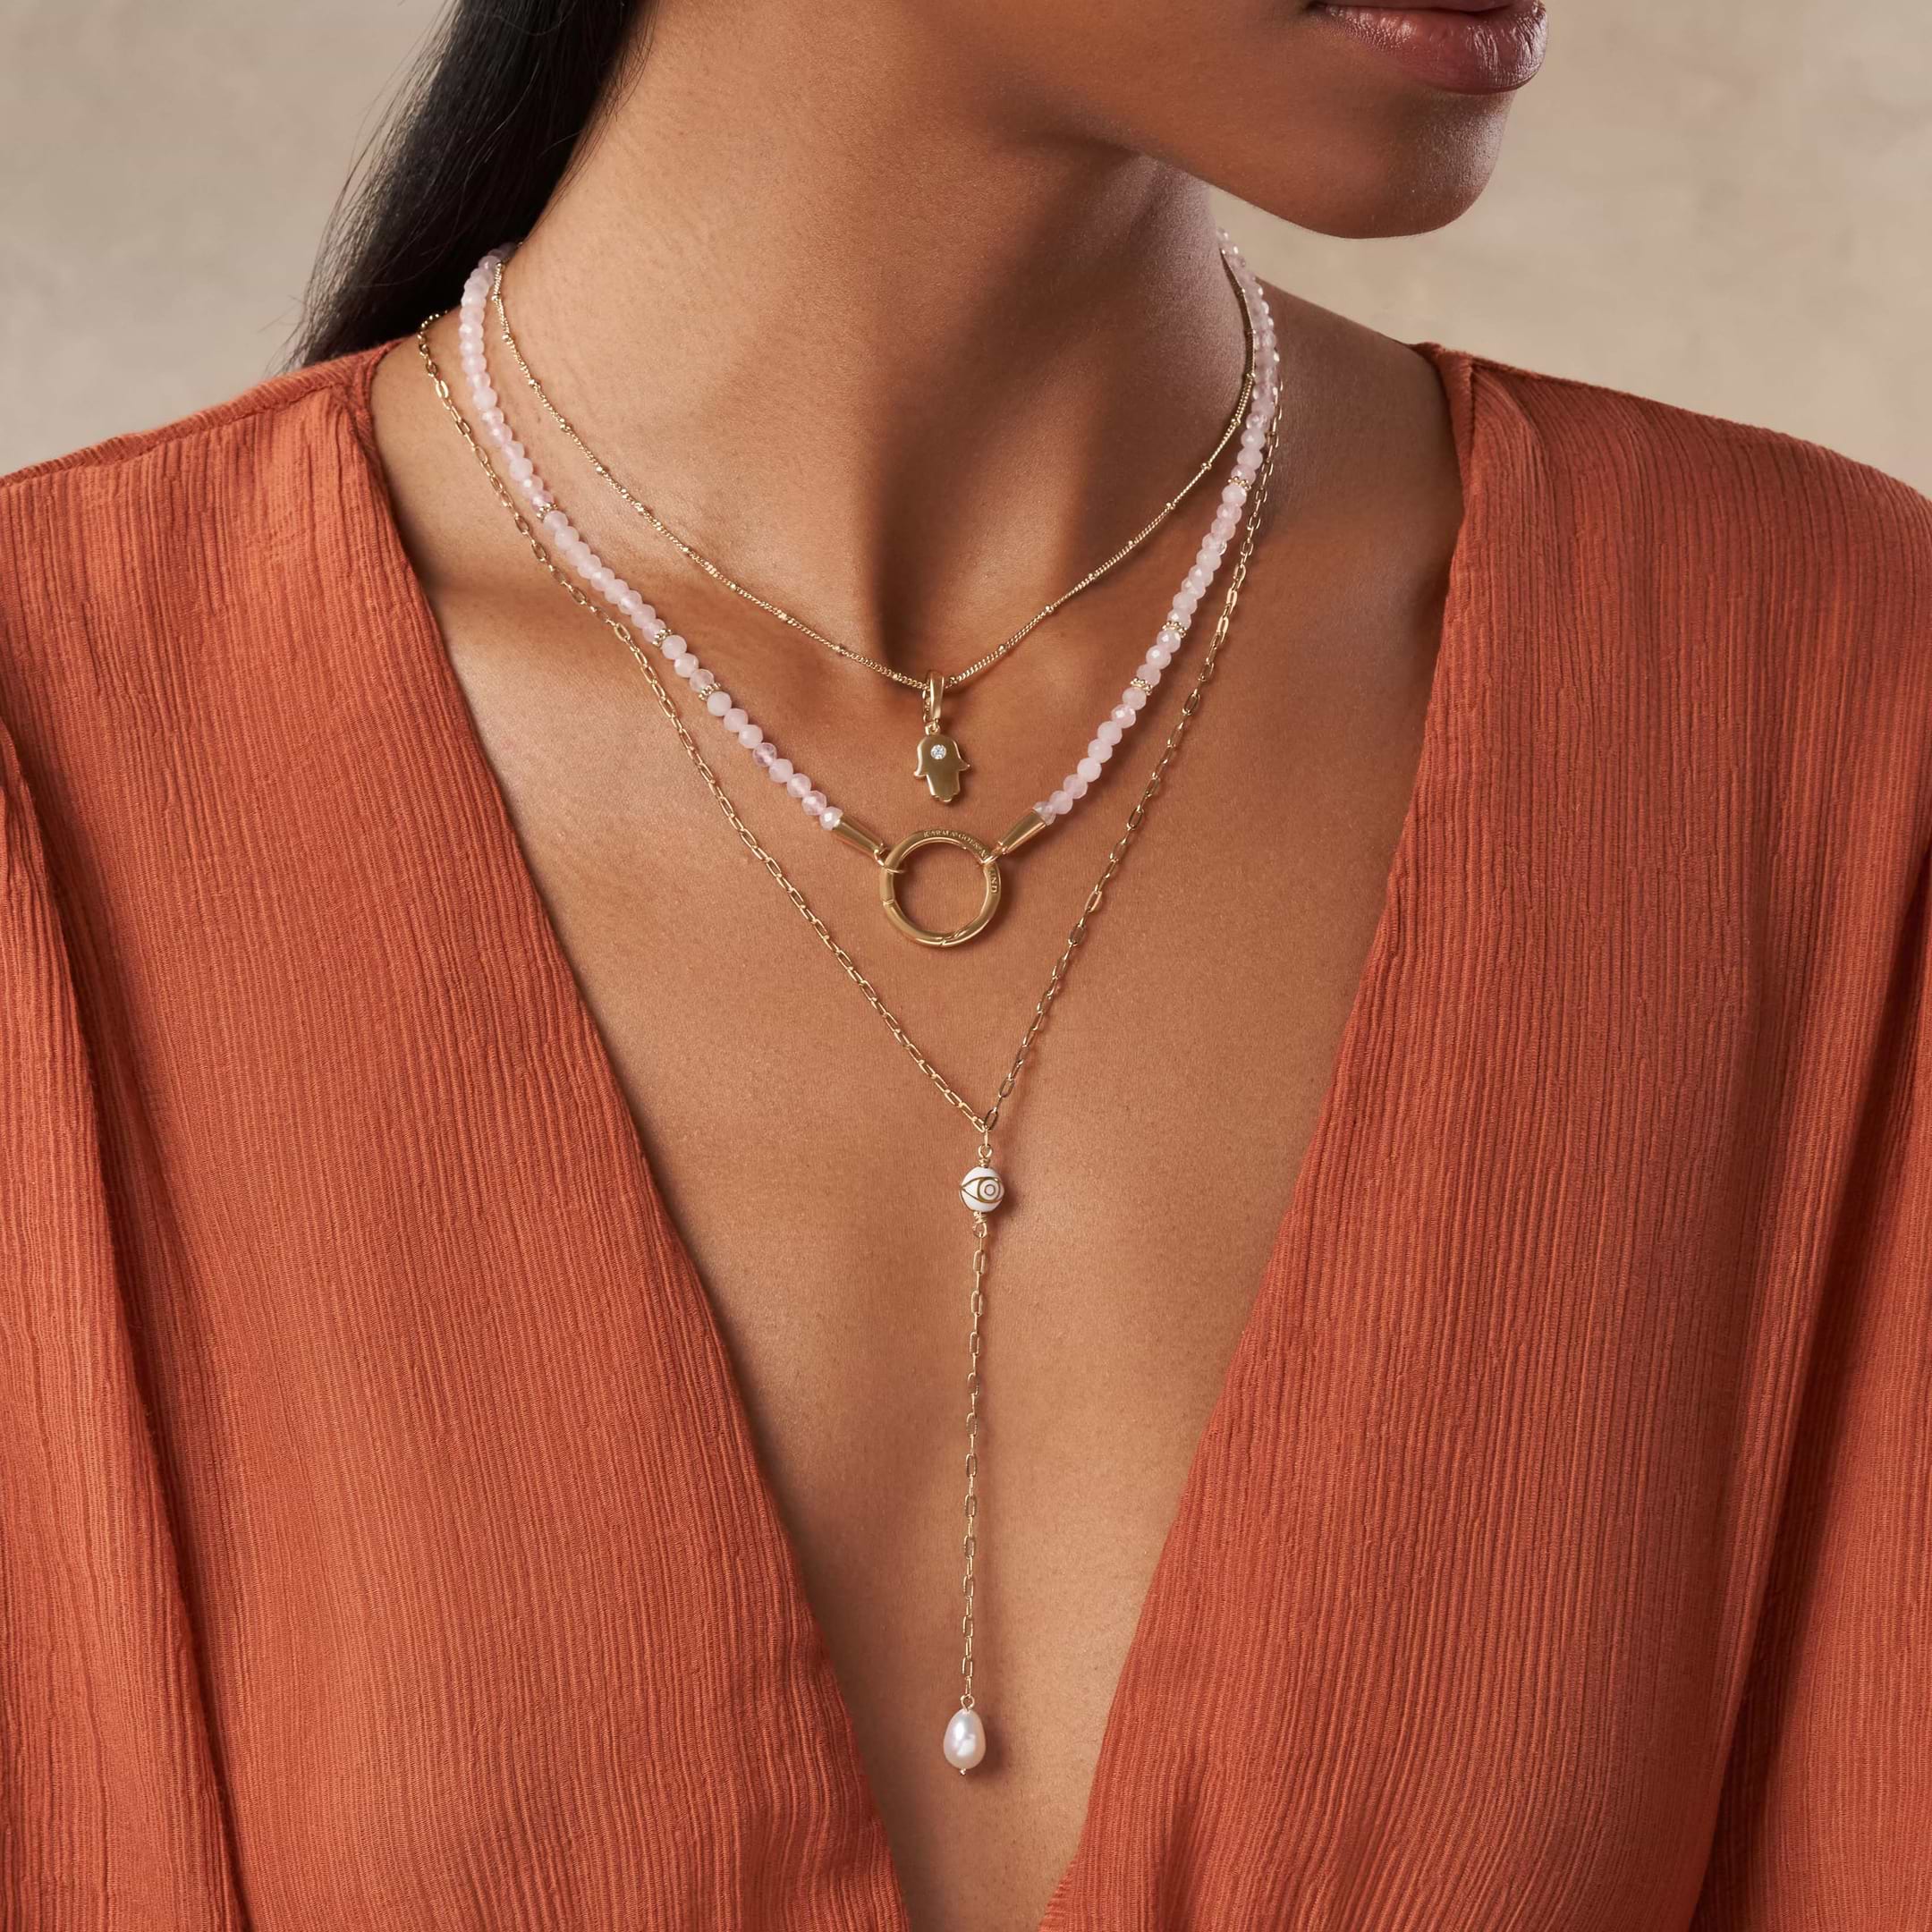 Picture of Healing Love - Rose Quartz Necklace